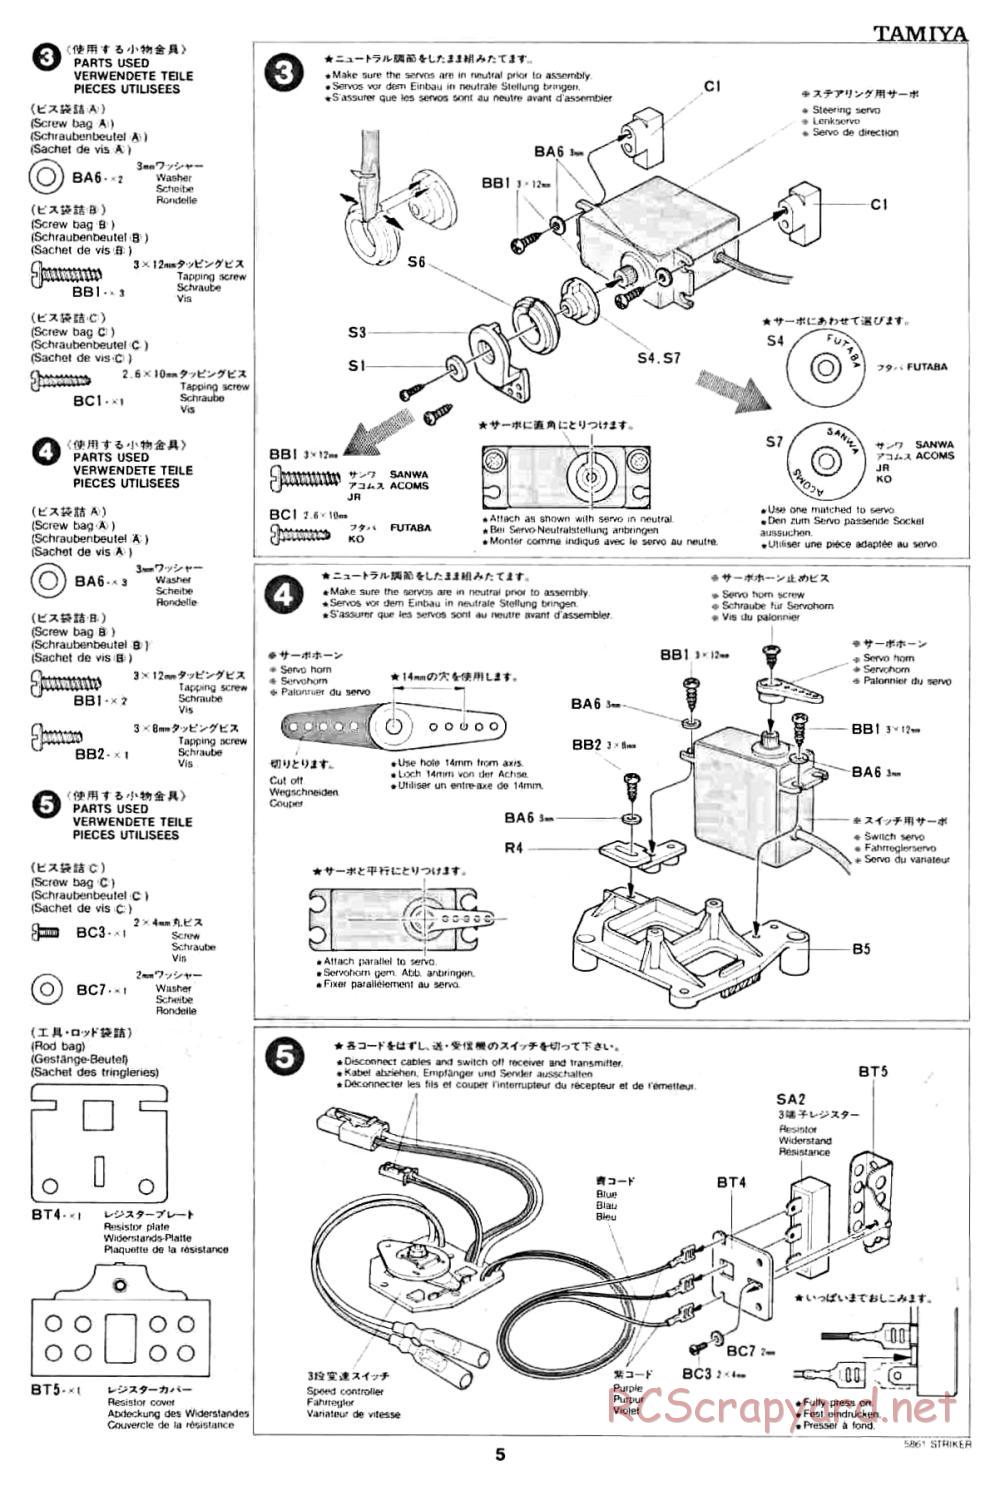 Tamiya - Striker - 58061 - Manual - Page 5